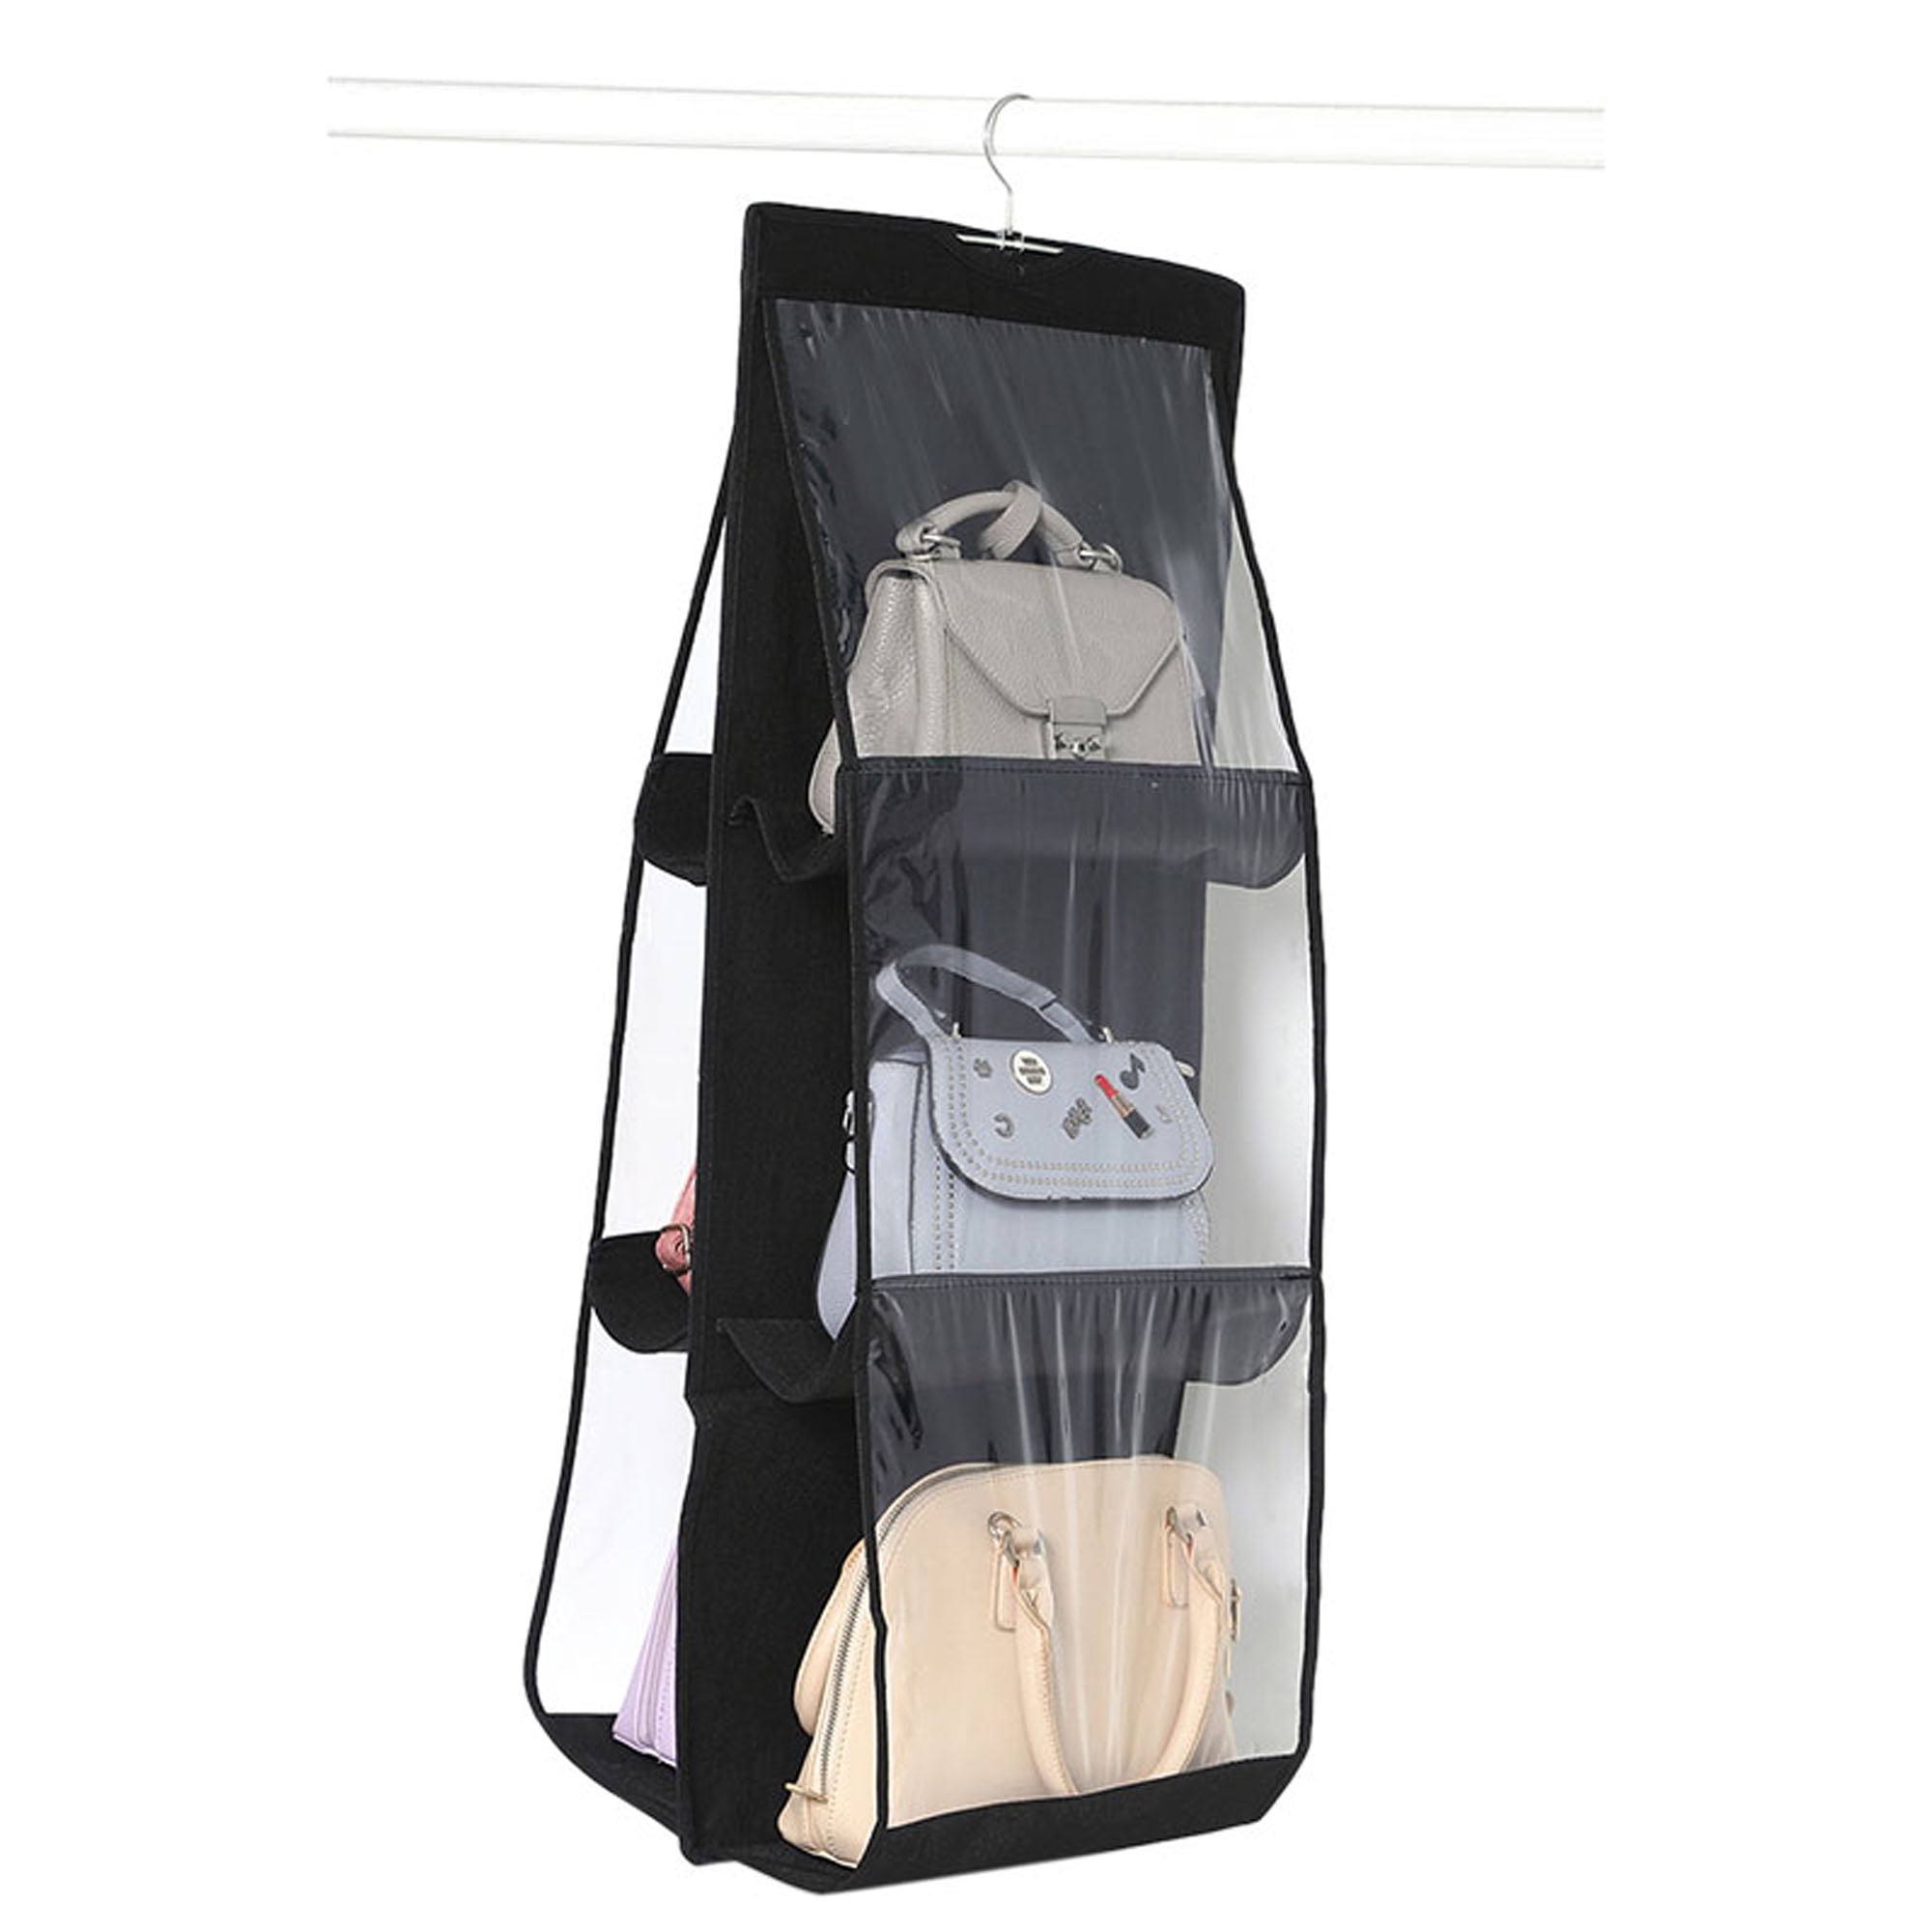 Sunisery 6 Pocket Folding Clear Hanging Bag 3 Layers Storage Holder ...